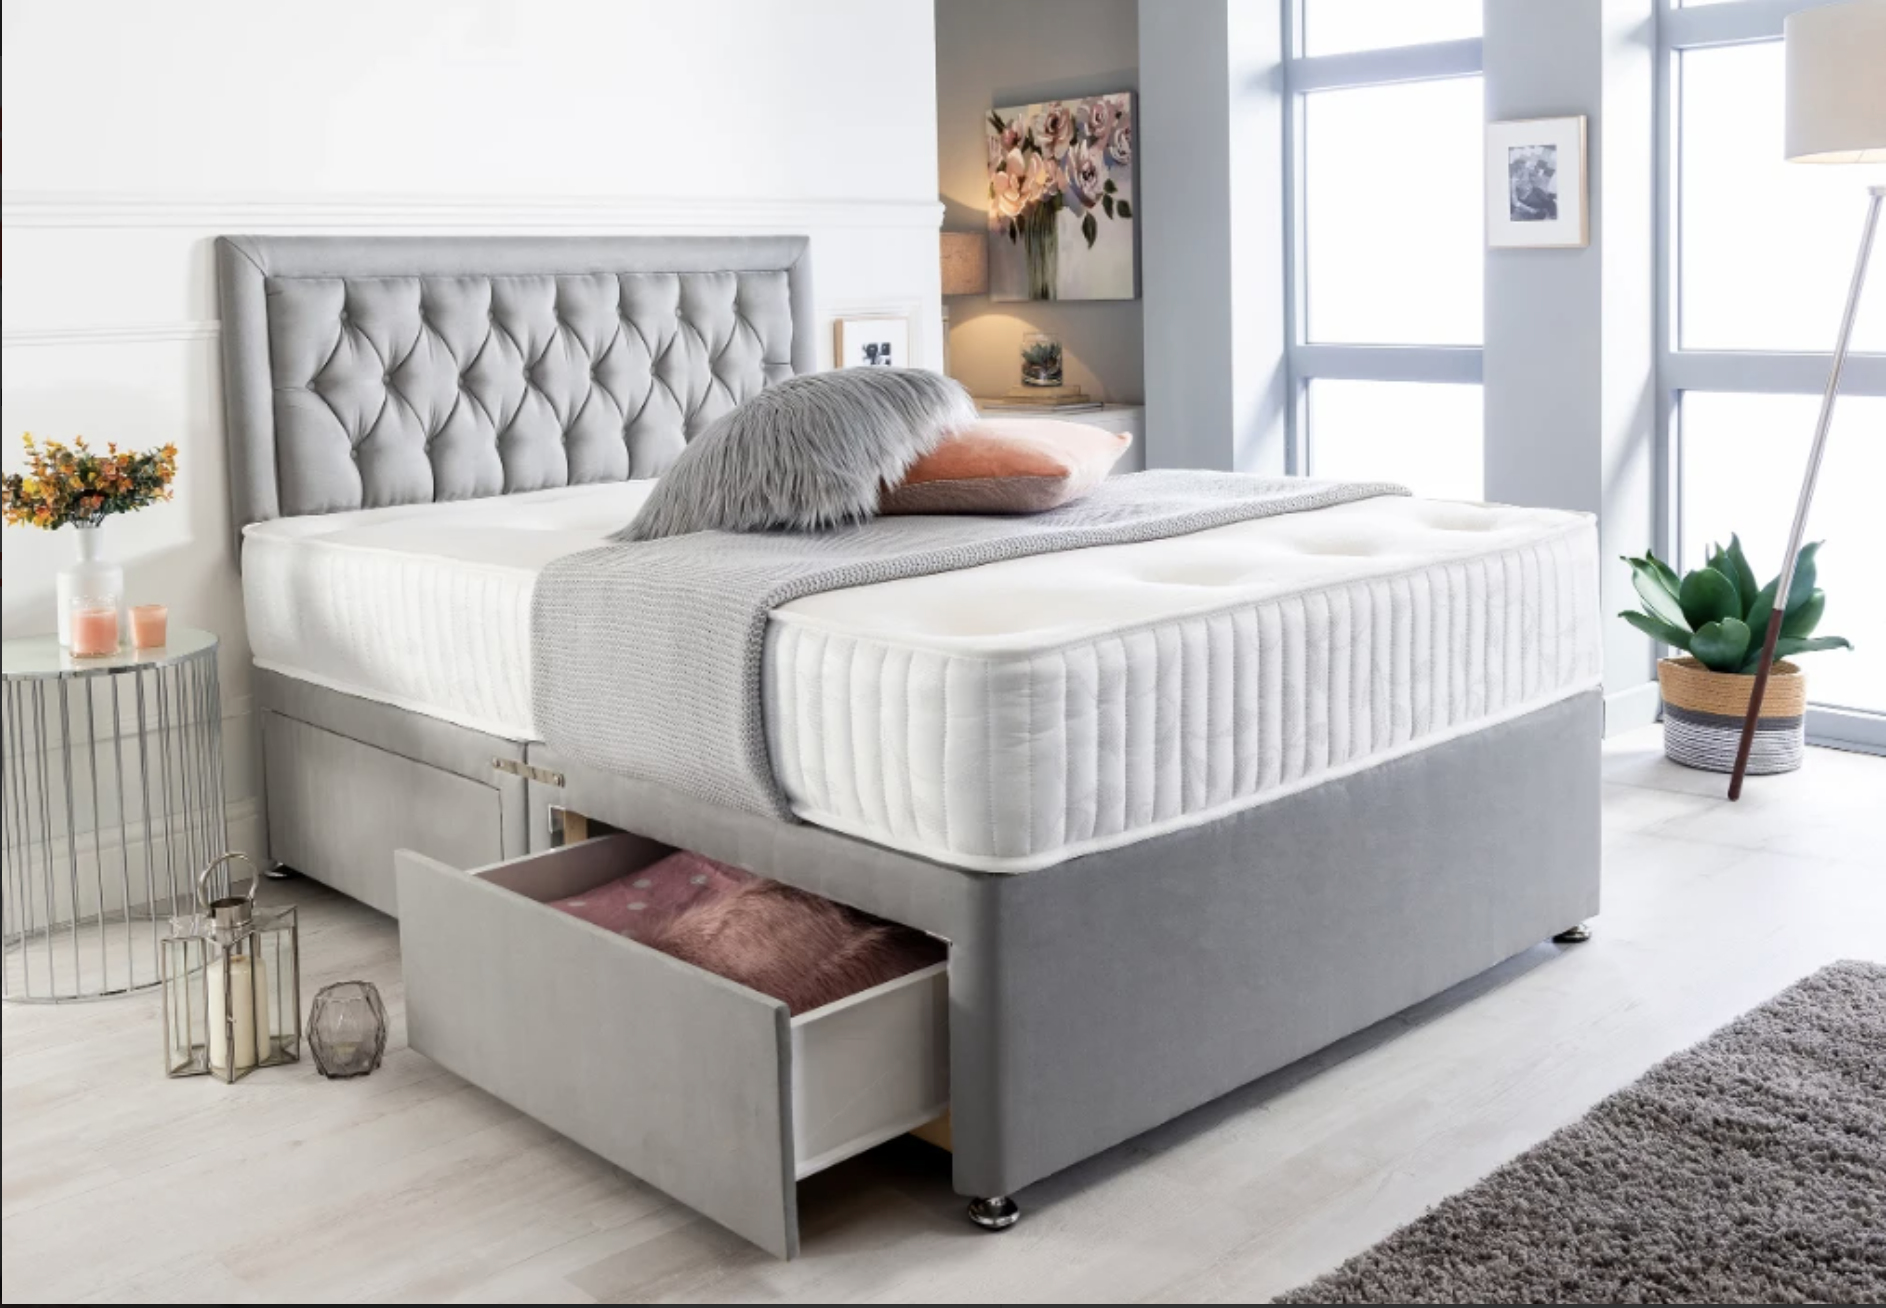 staples beds co uk mattresses